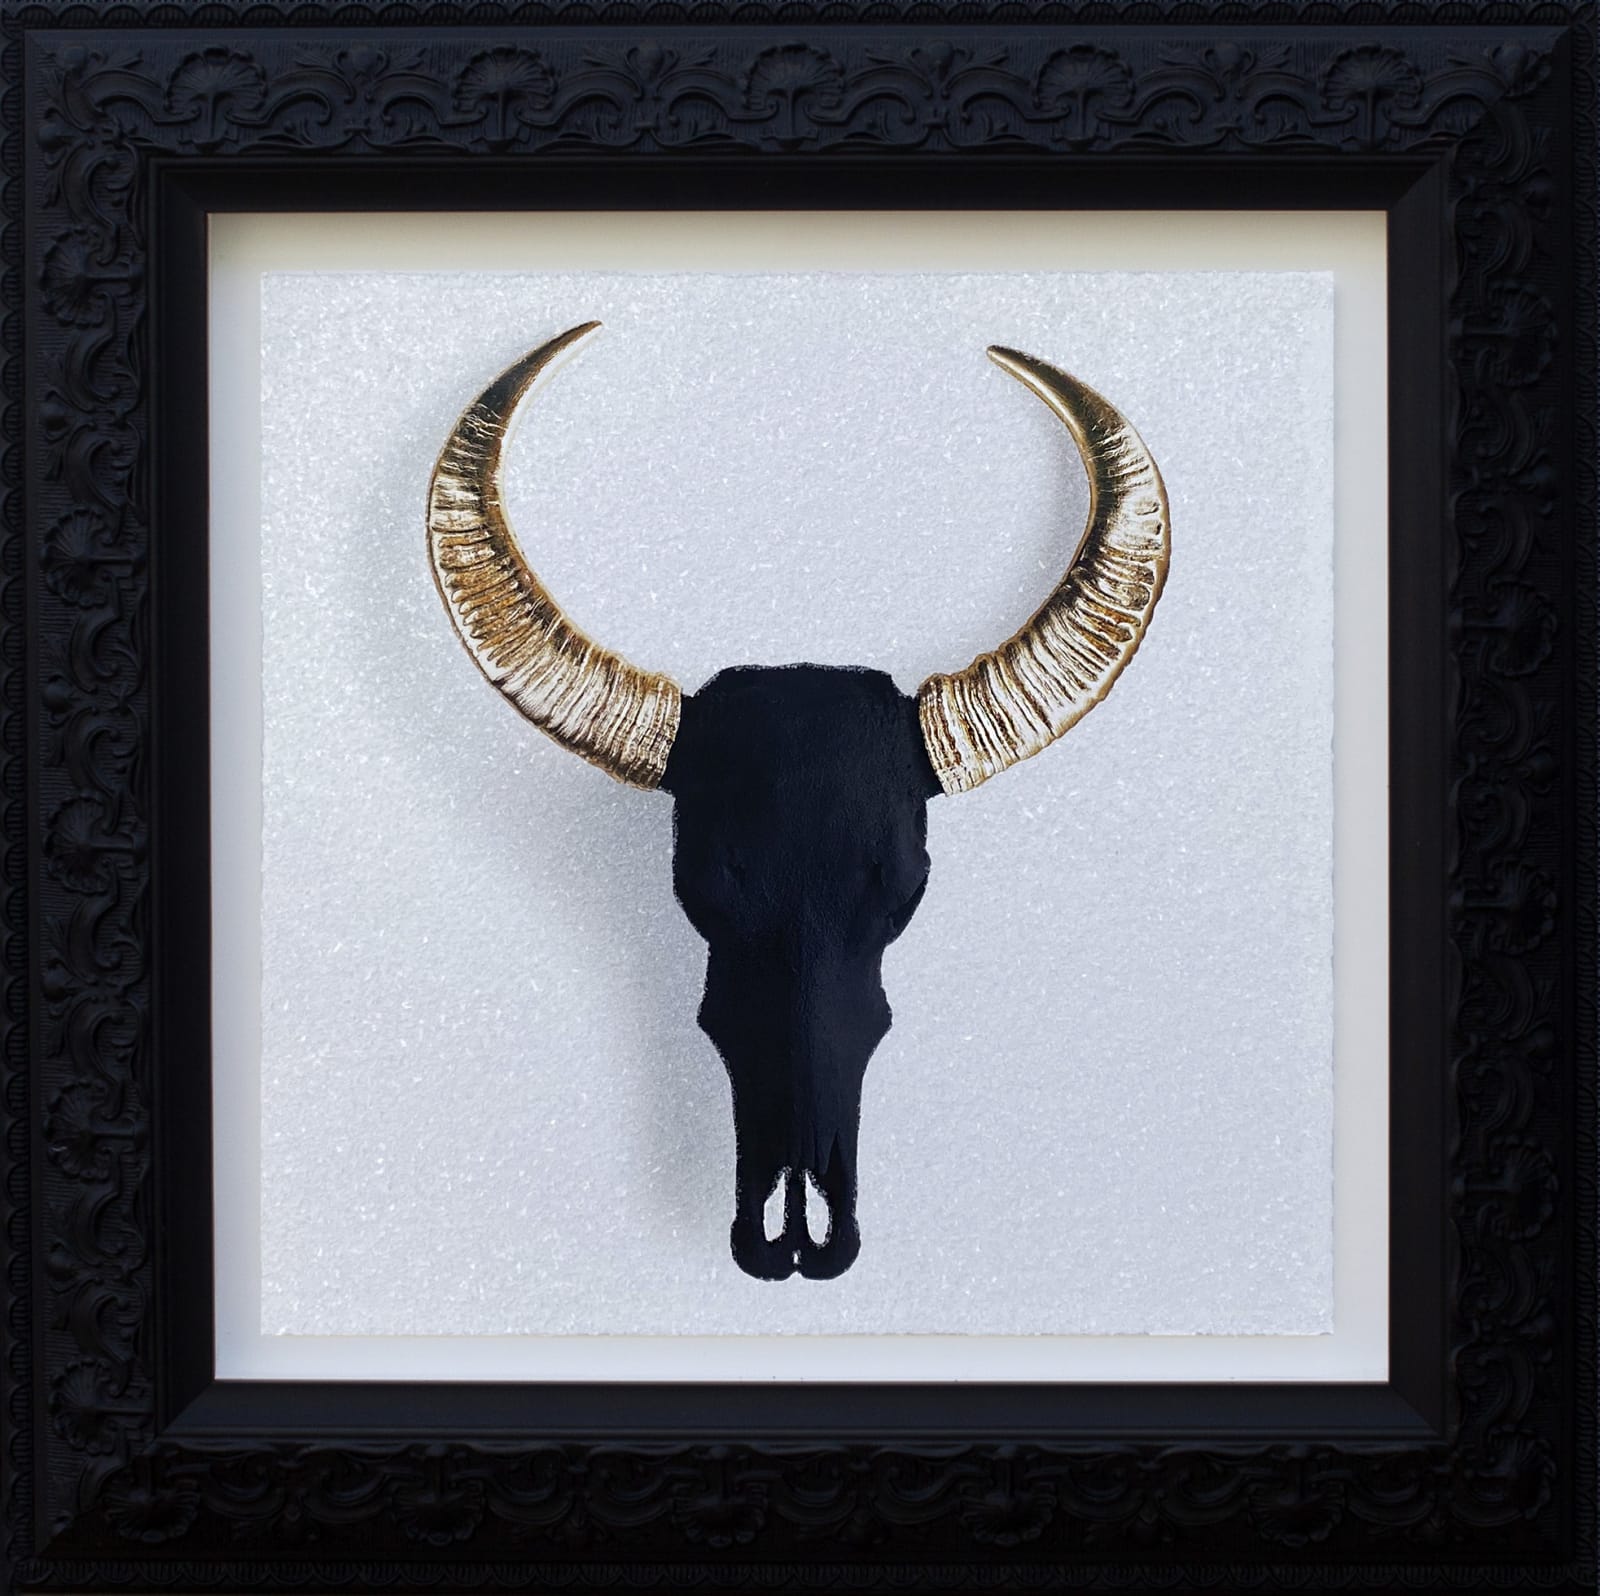 ANGELA MORRIS-WINMILL, Black with Gold Chinese Water Buffalo Skull on White Diamond Dust